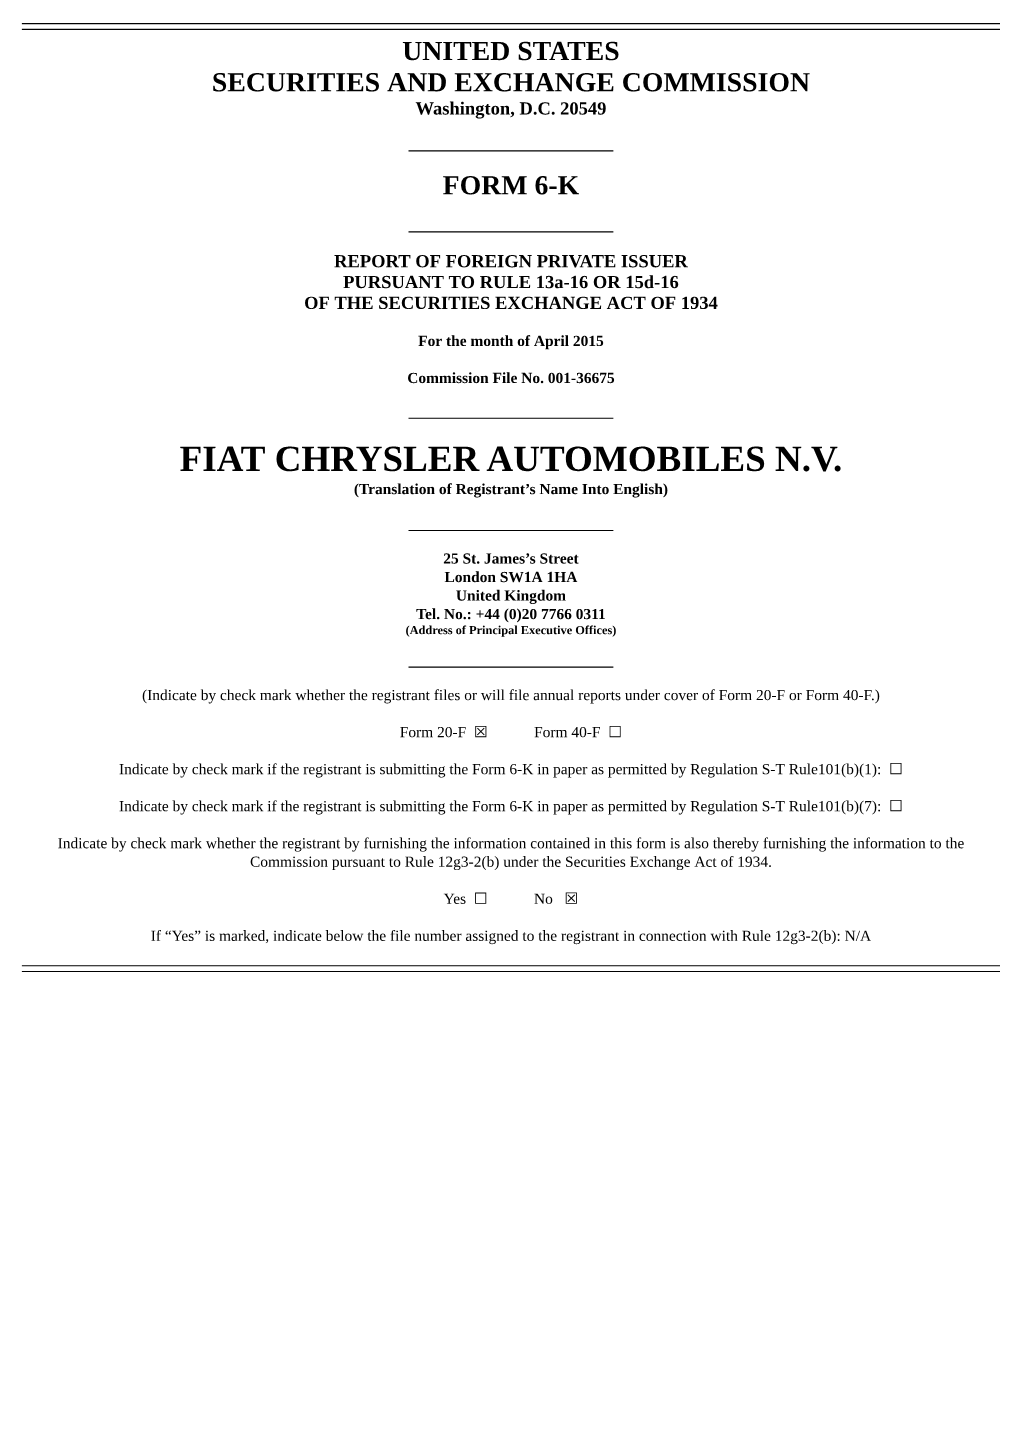 FIAT CHRYSLER AUTOMOBILES N.V. (Translation of Registrant’S Name Into English)